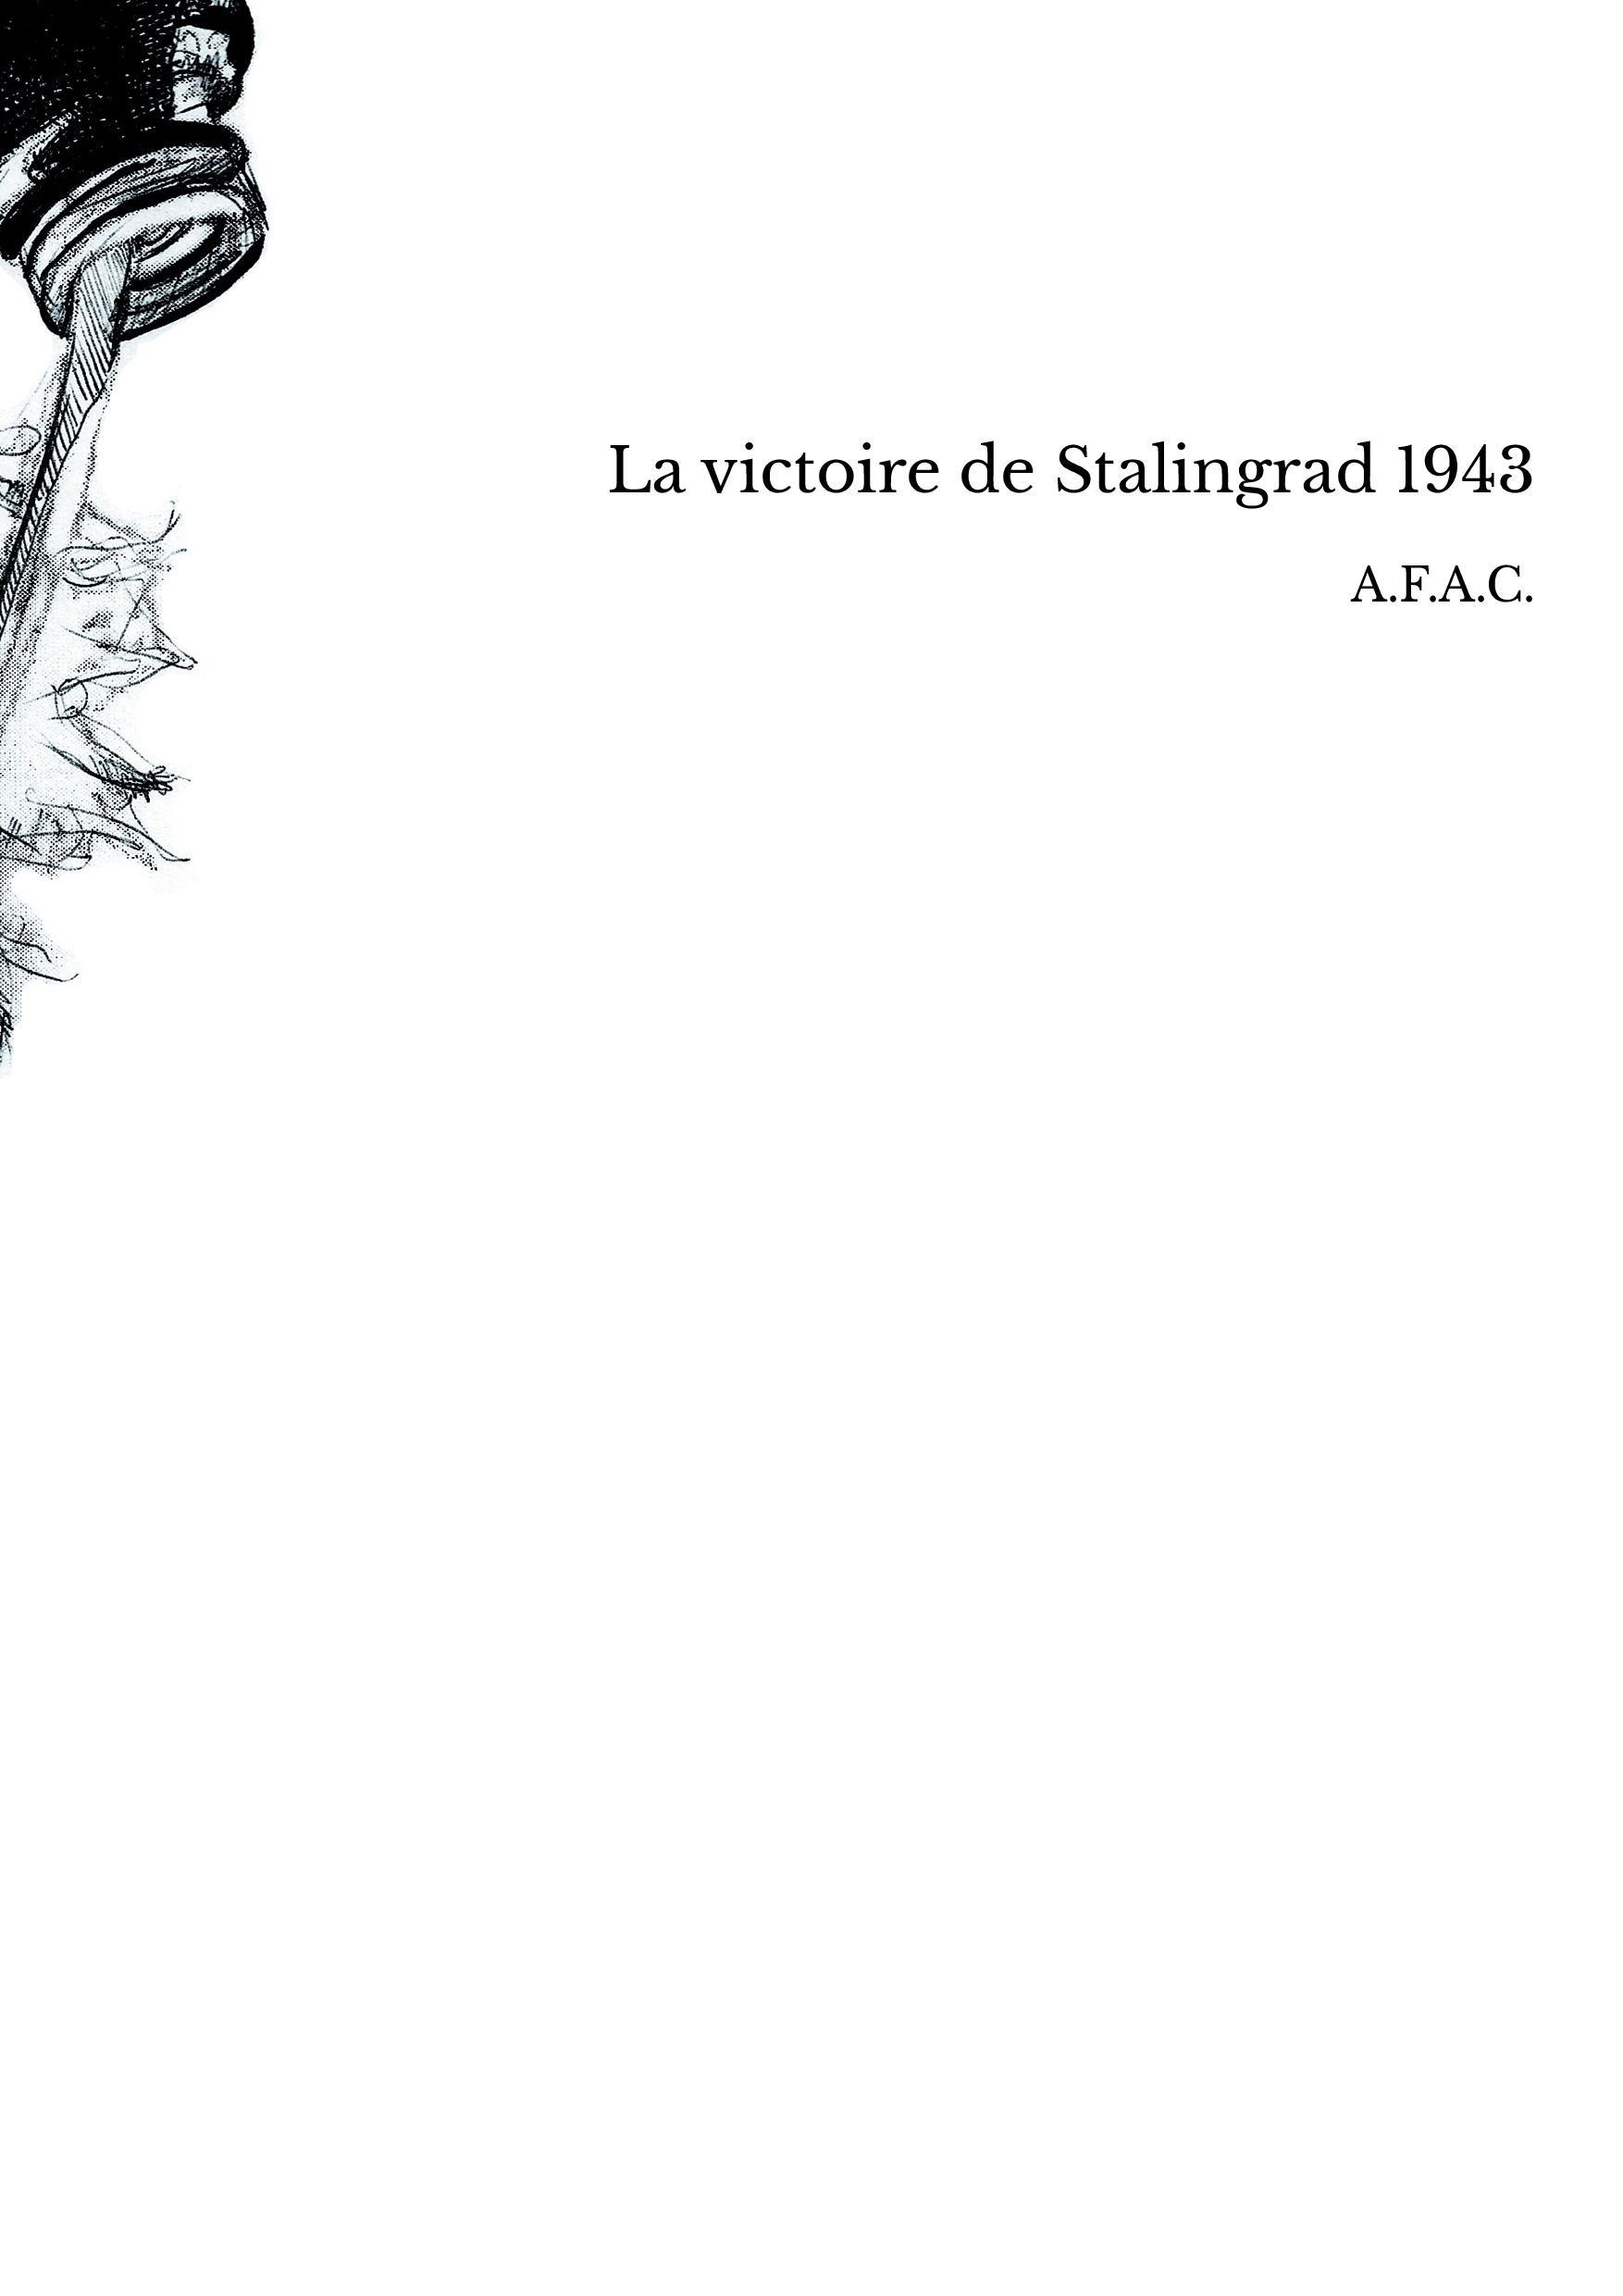 La victoire de Stalingrad 1943